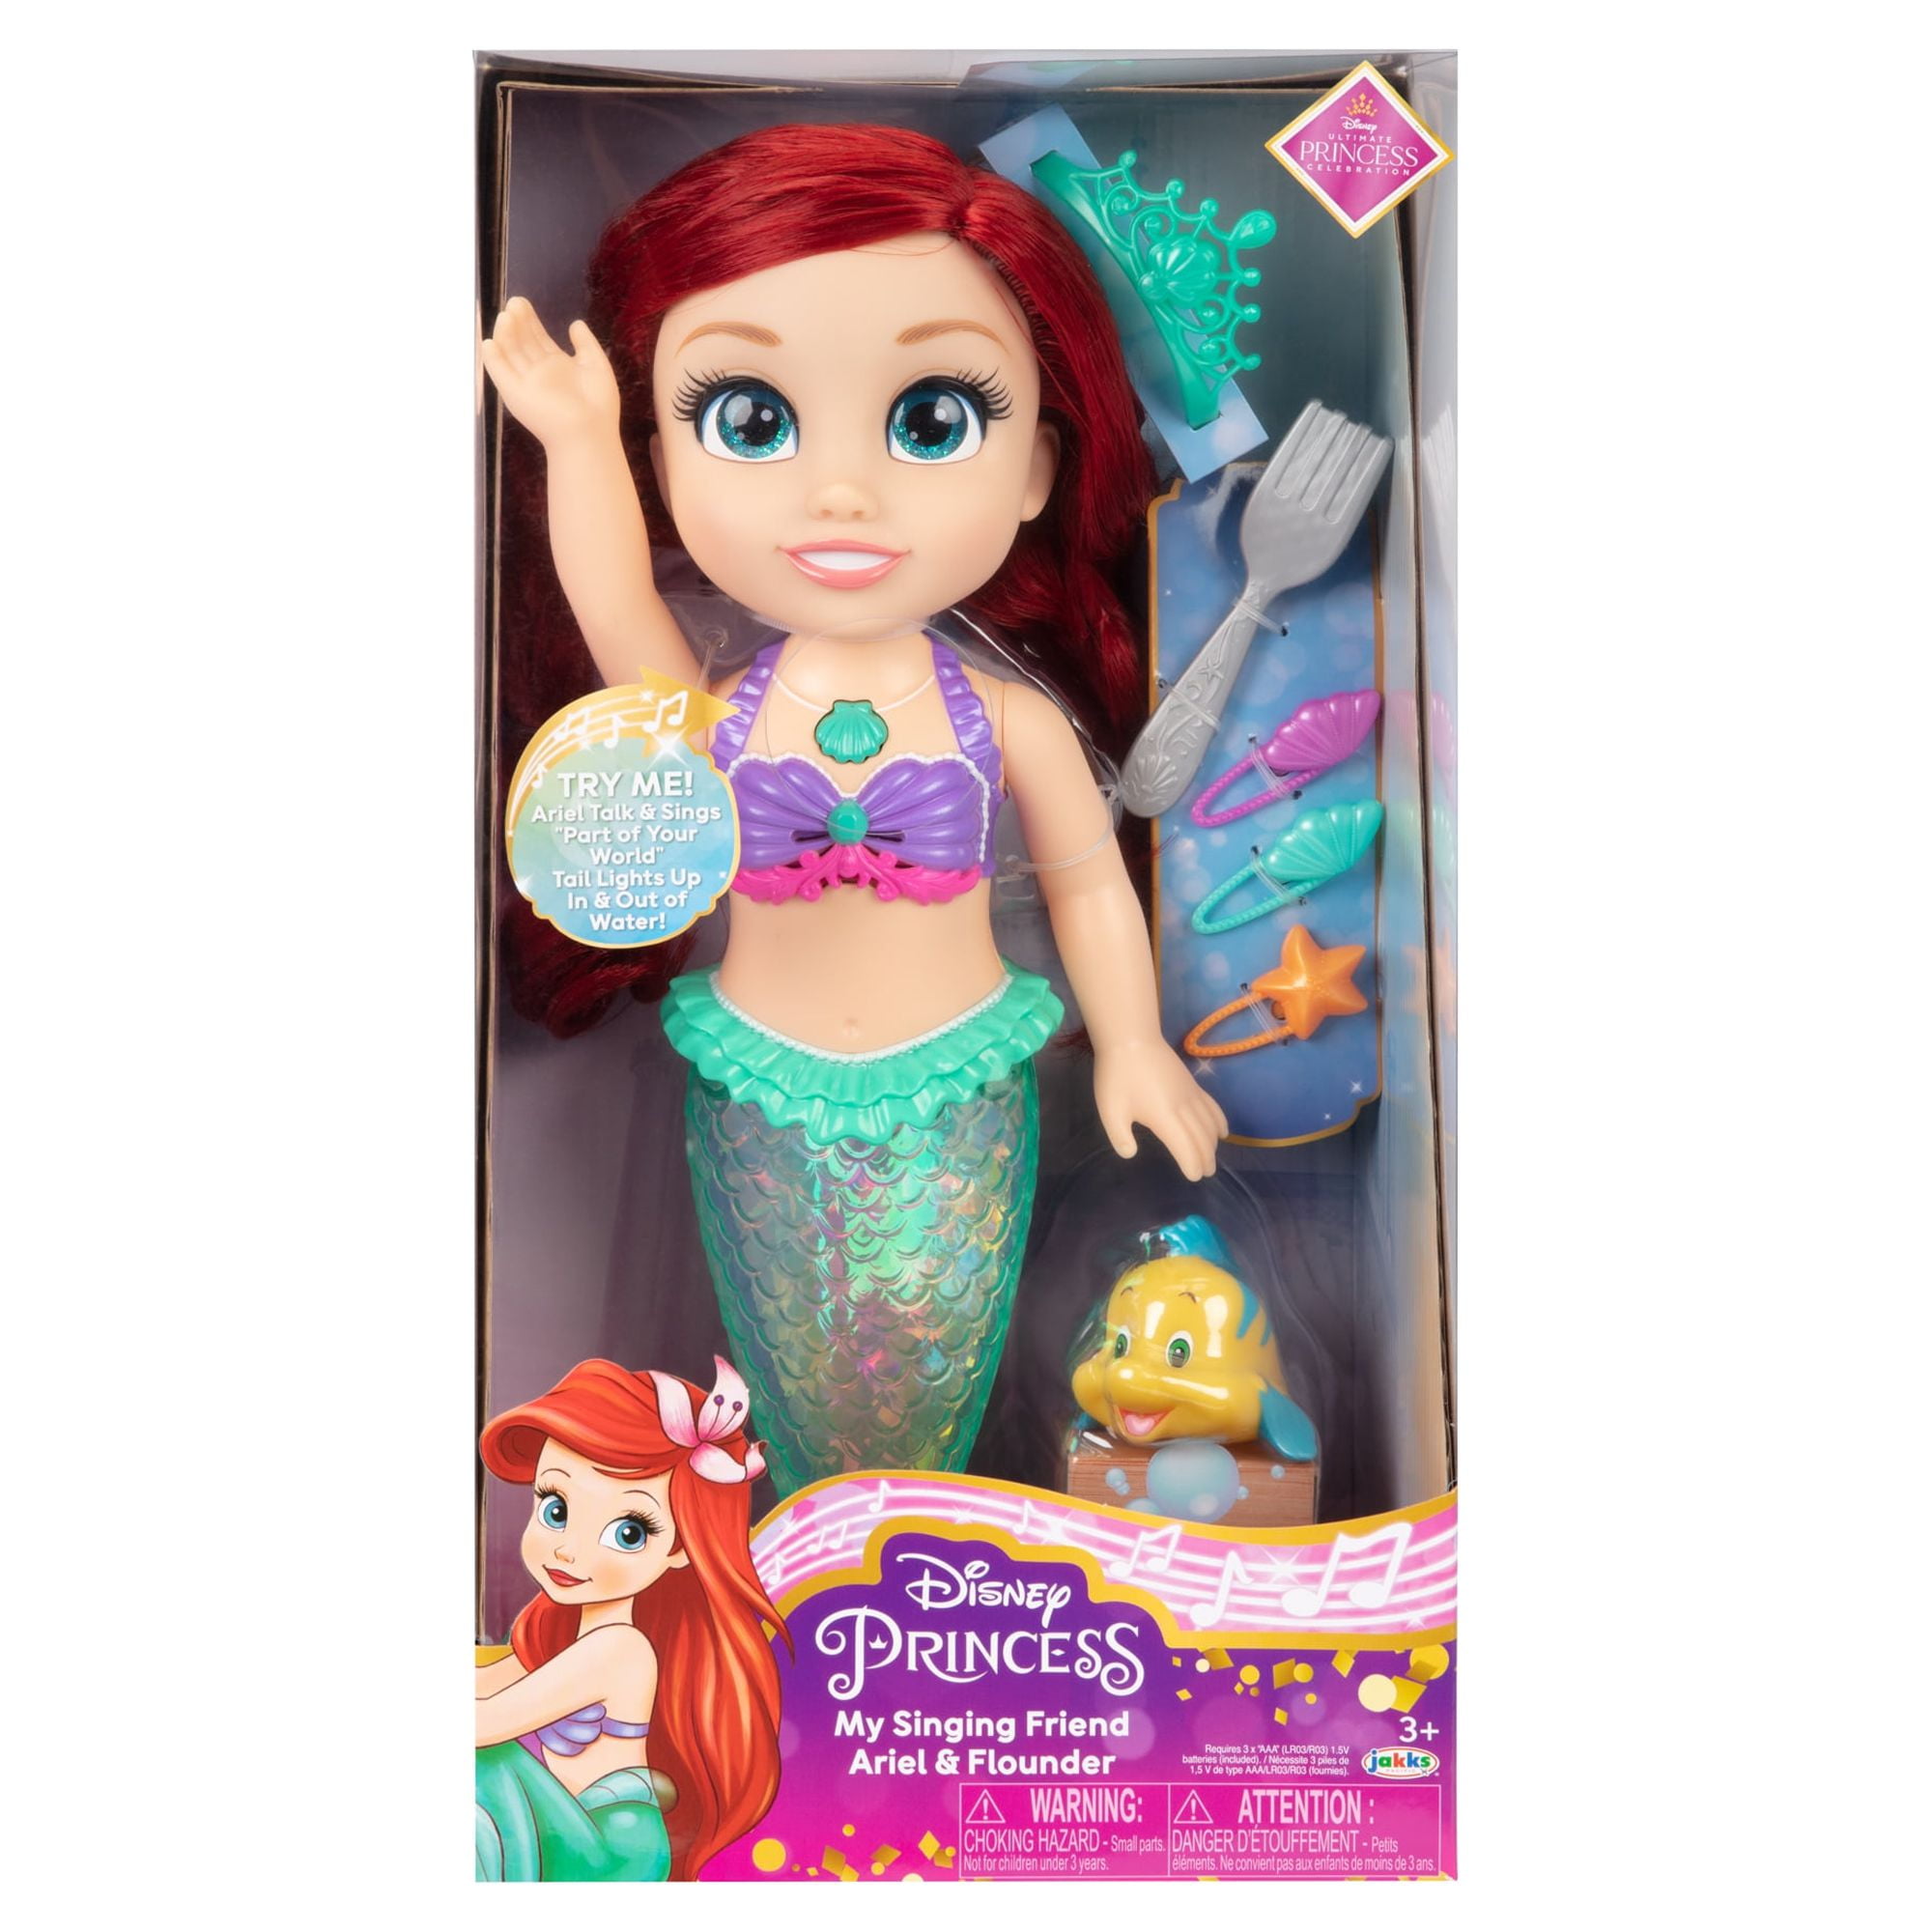 Disney Princess The Little Mermaid My Singing Friend Bath Time Play Ariel And Flounder